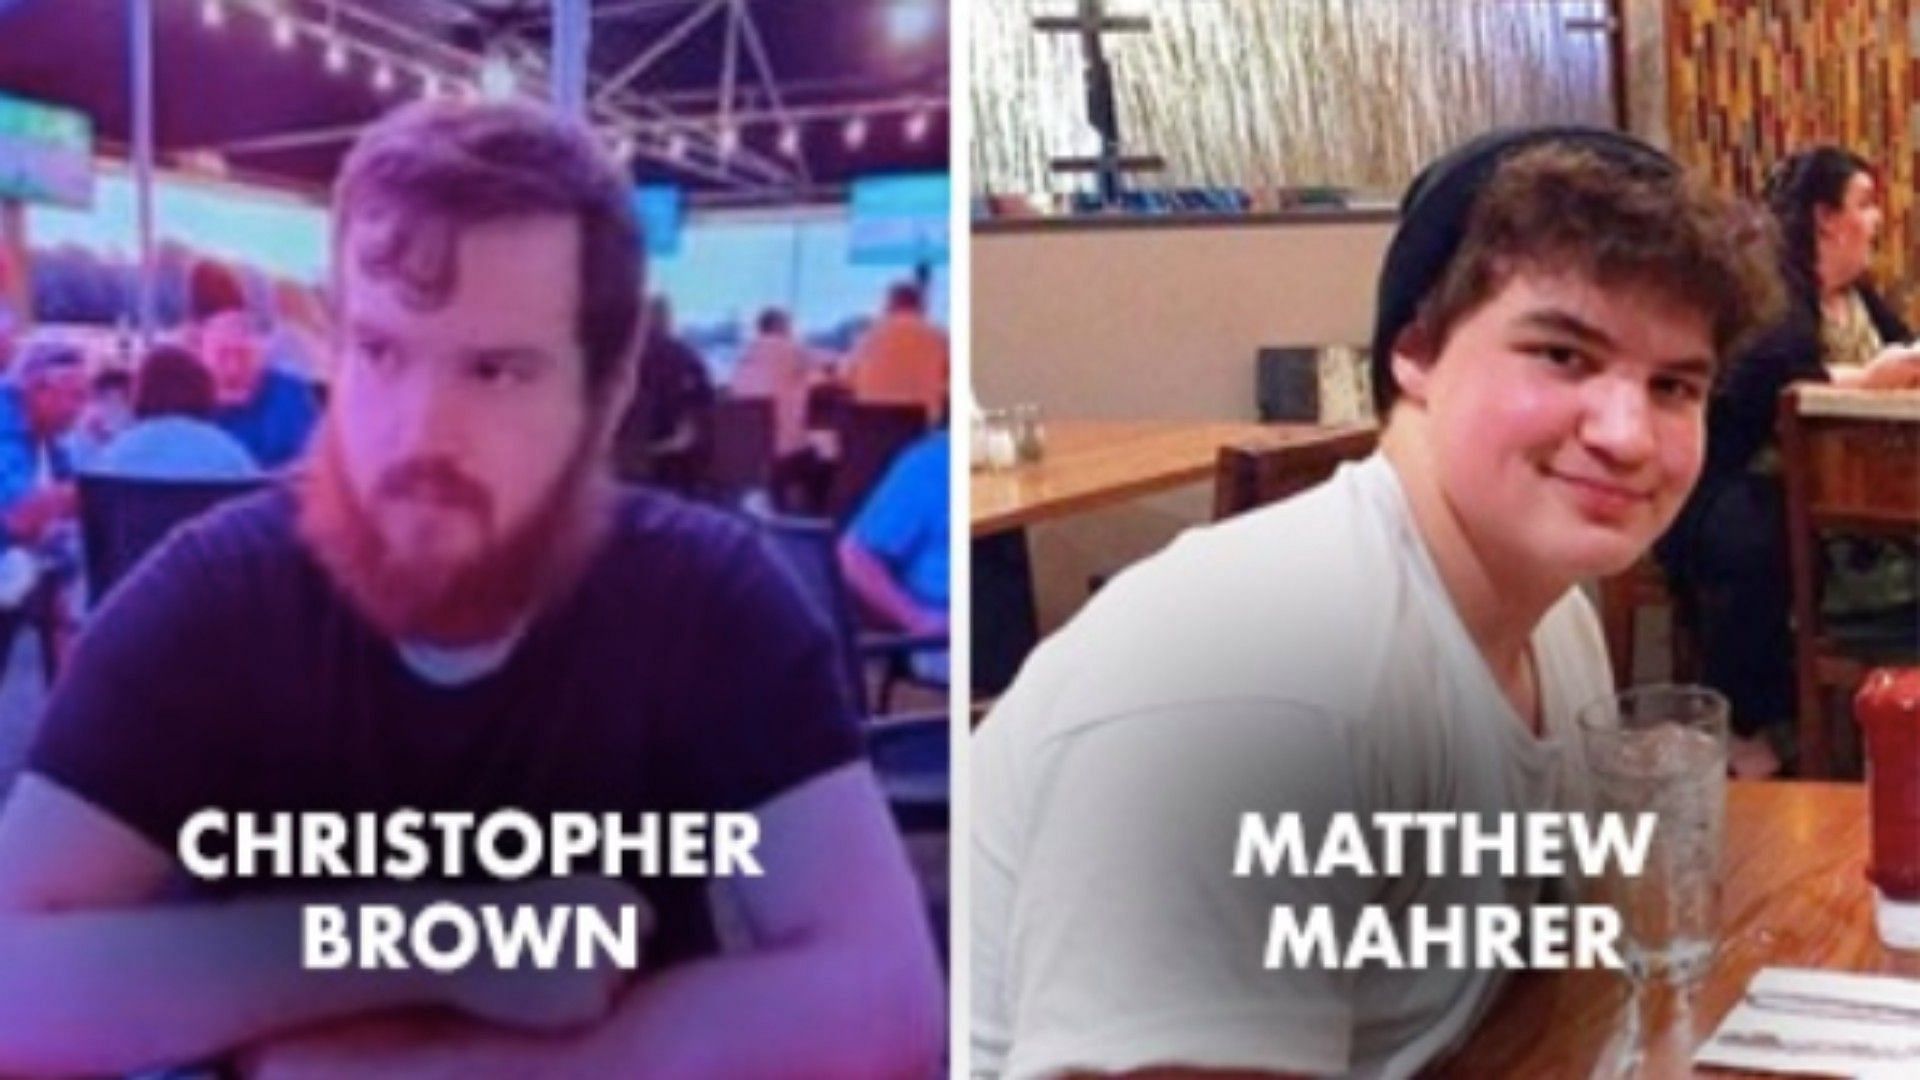 Christopher Brown and Matthew Mahrer (Image via StopAntisemitism/Twitter)